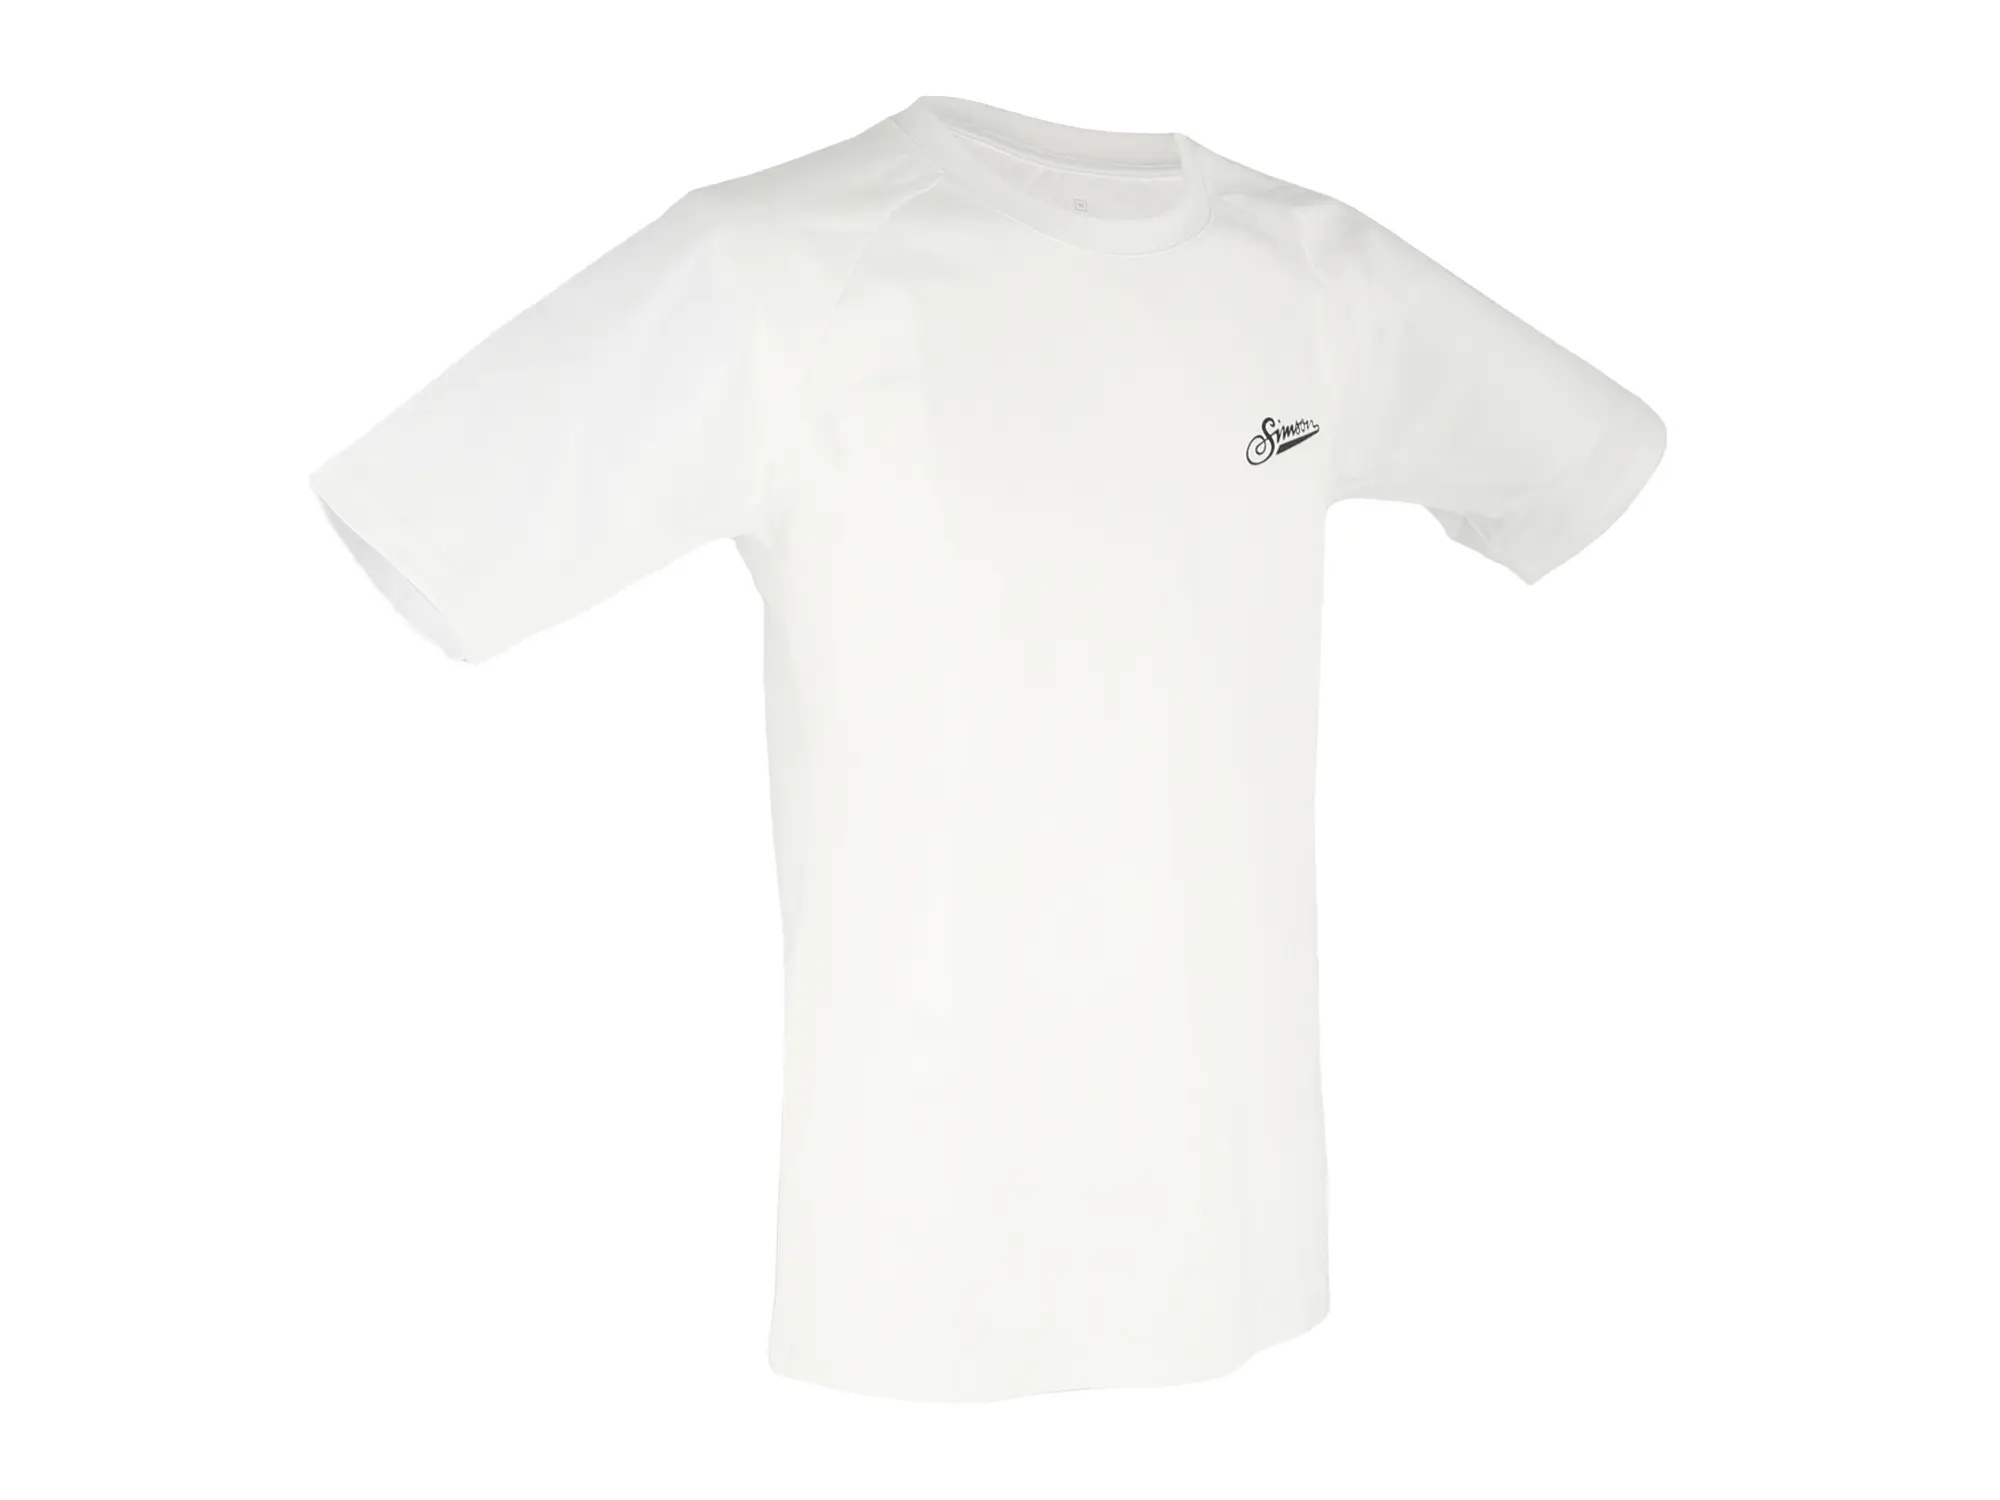 T-Shirt "Simson" - Weiß, Art.-Nr.: 10072507 - Bild 1